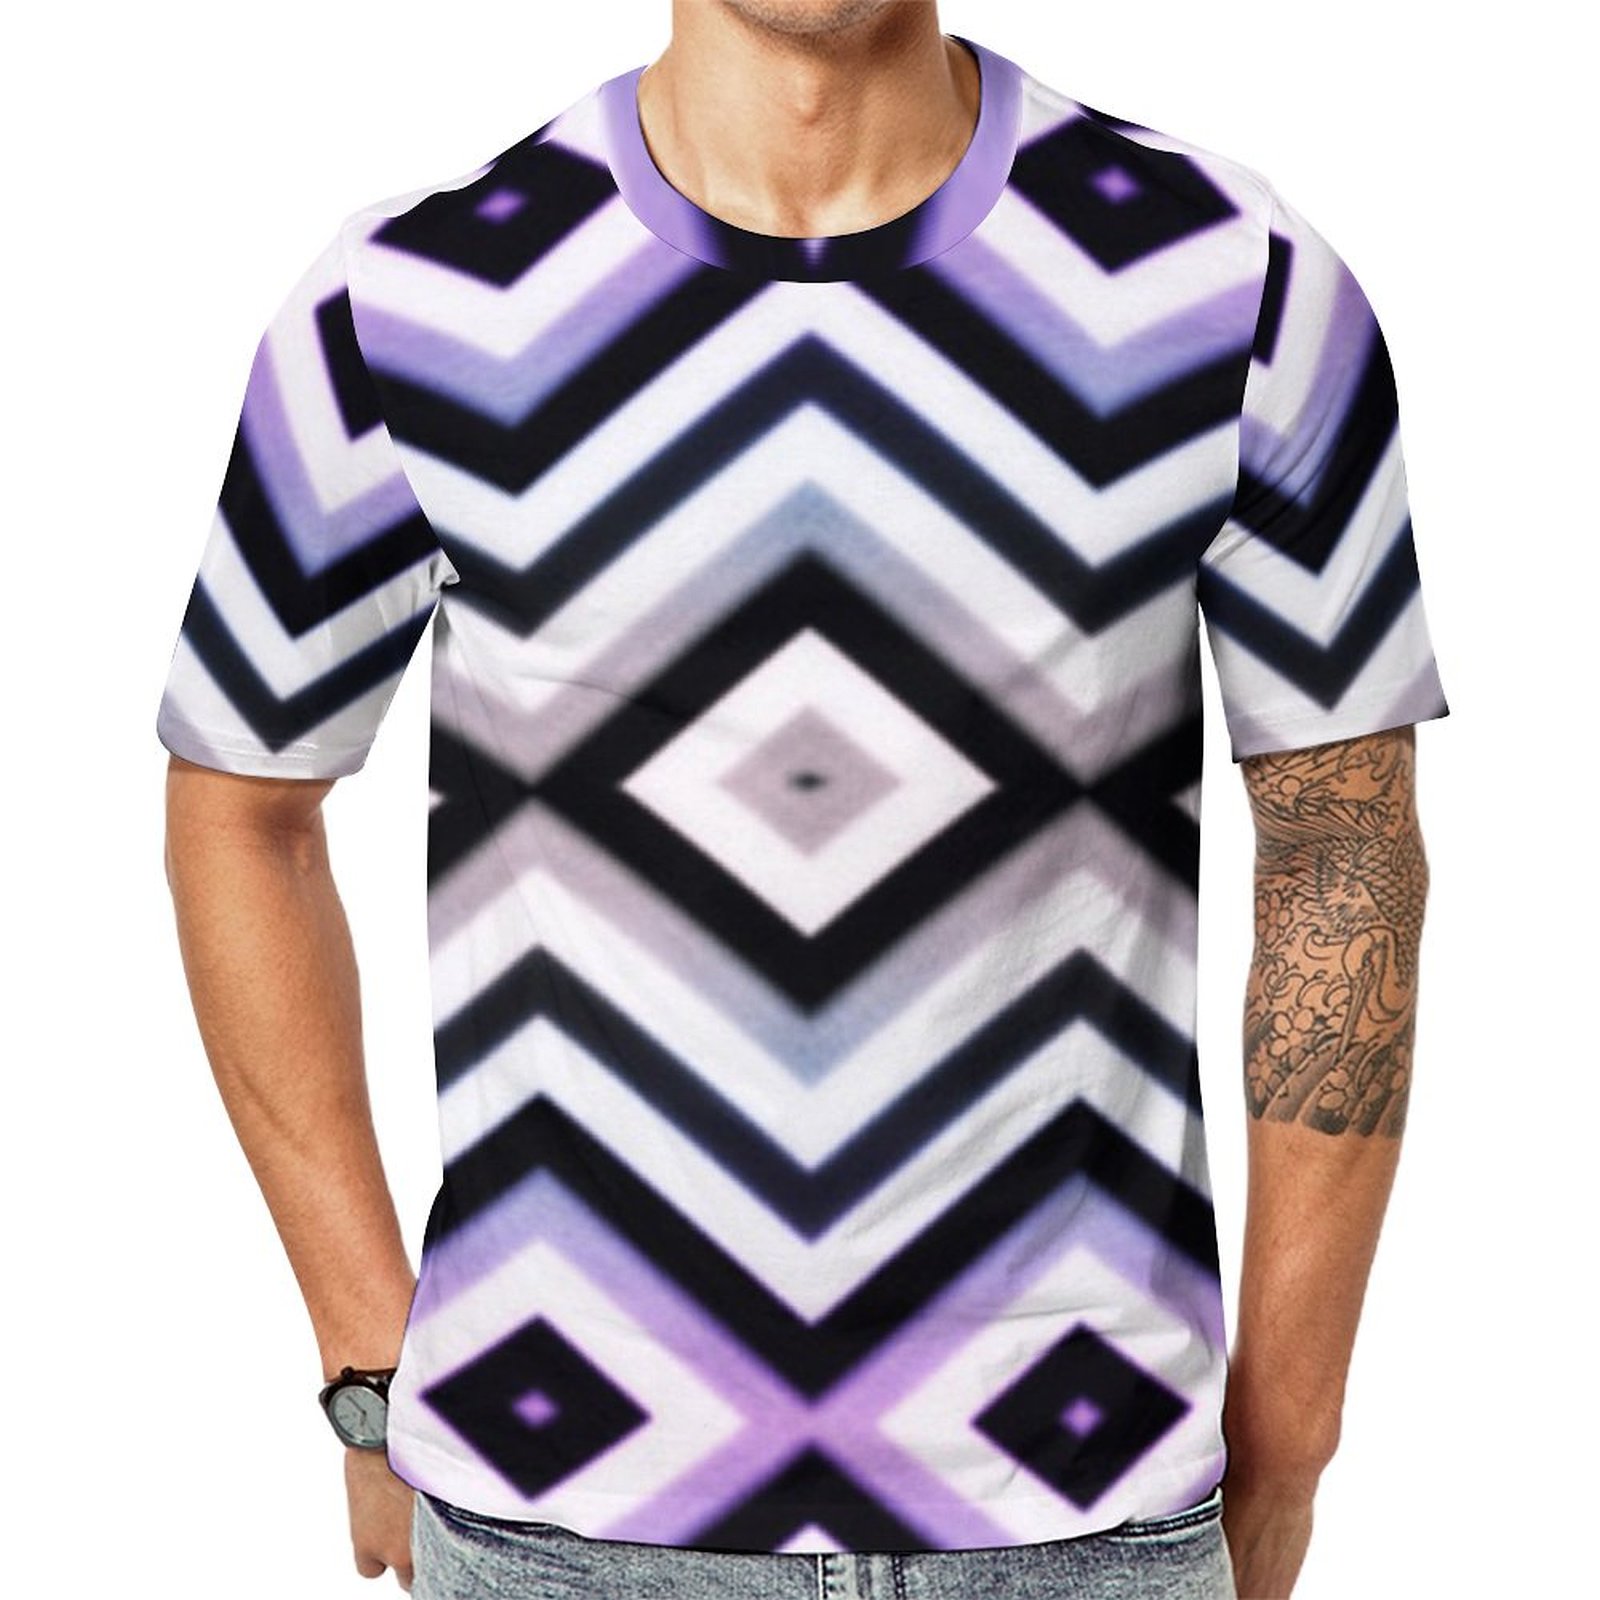 Geometric Chevron Circles Short Sleeve Print Unisex Tshirt Summer Casual Tees for Men and Women Coolcoshirts